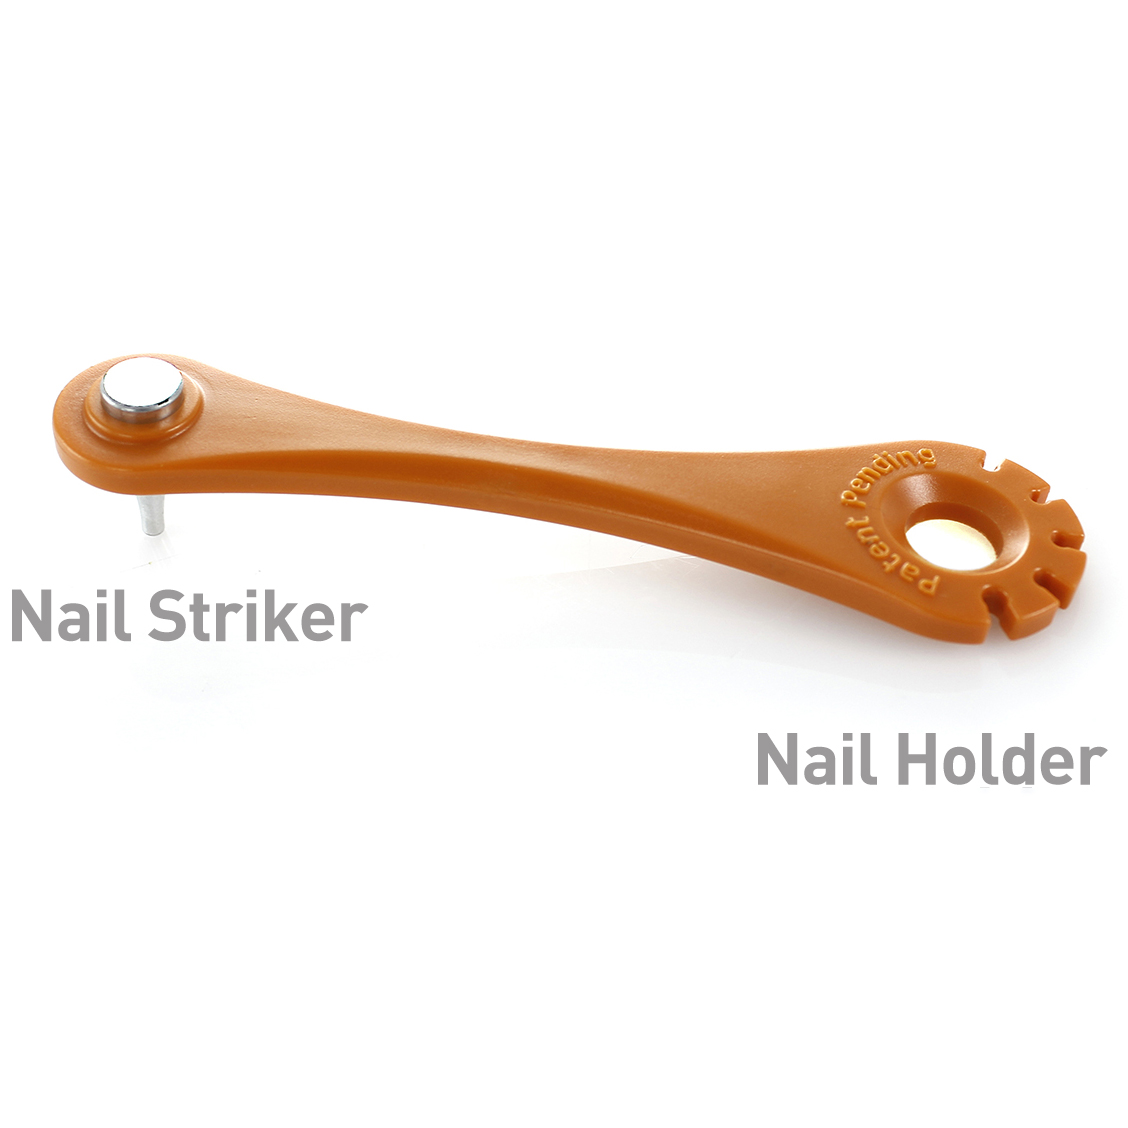 eToolscity Dual Purpose Nail Holder and Striker